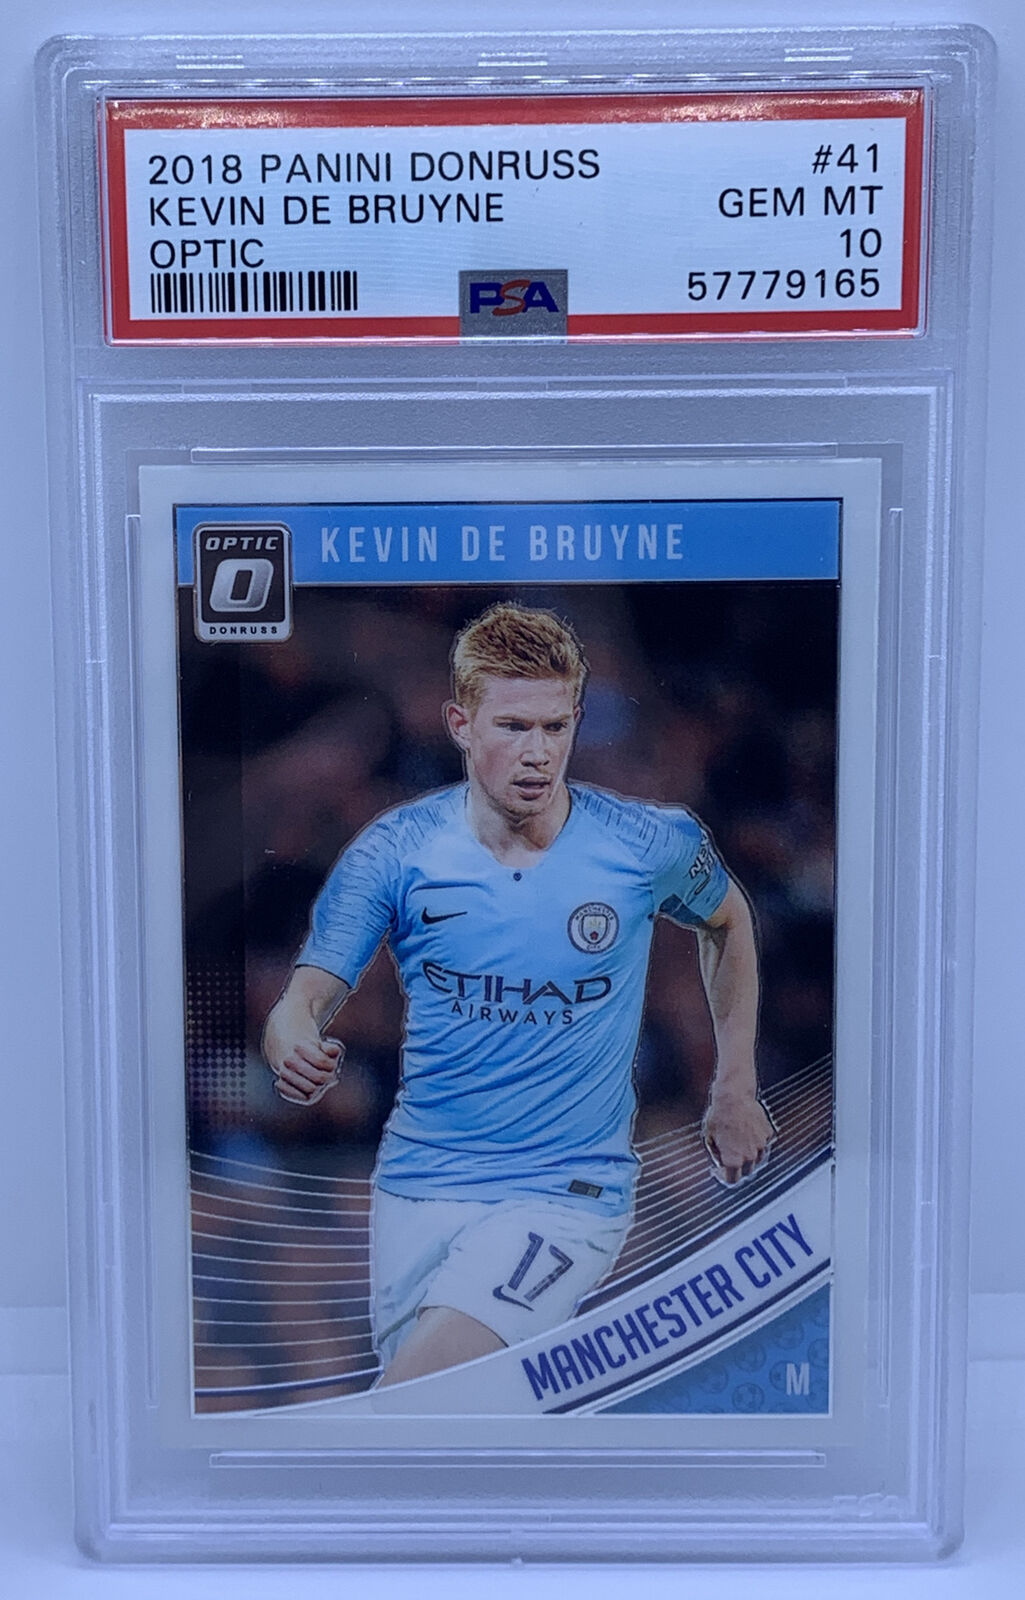 2018 Donruss Optic Soccer #41 Kevin De Bruyne Manchester City PSA 10 GEM MINT